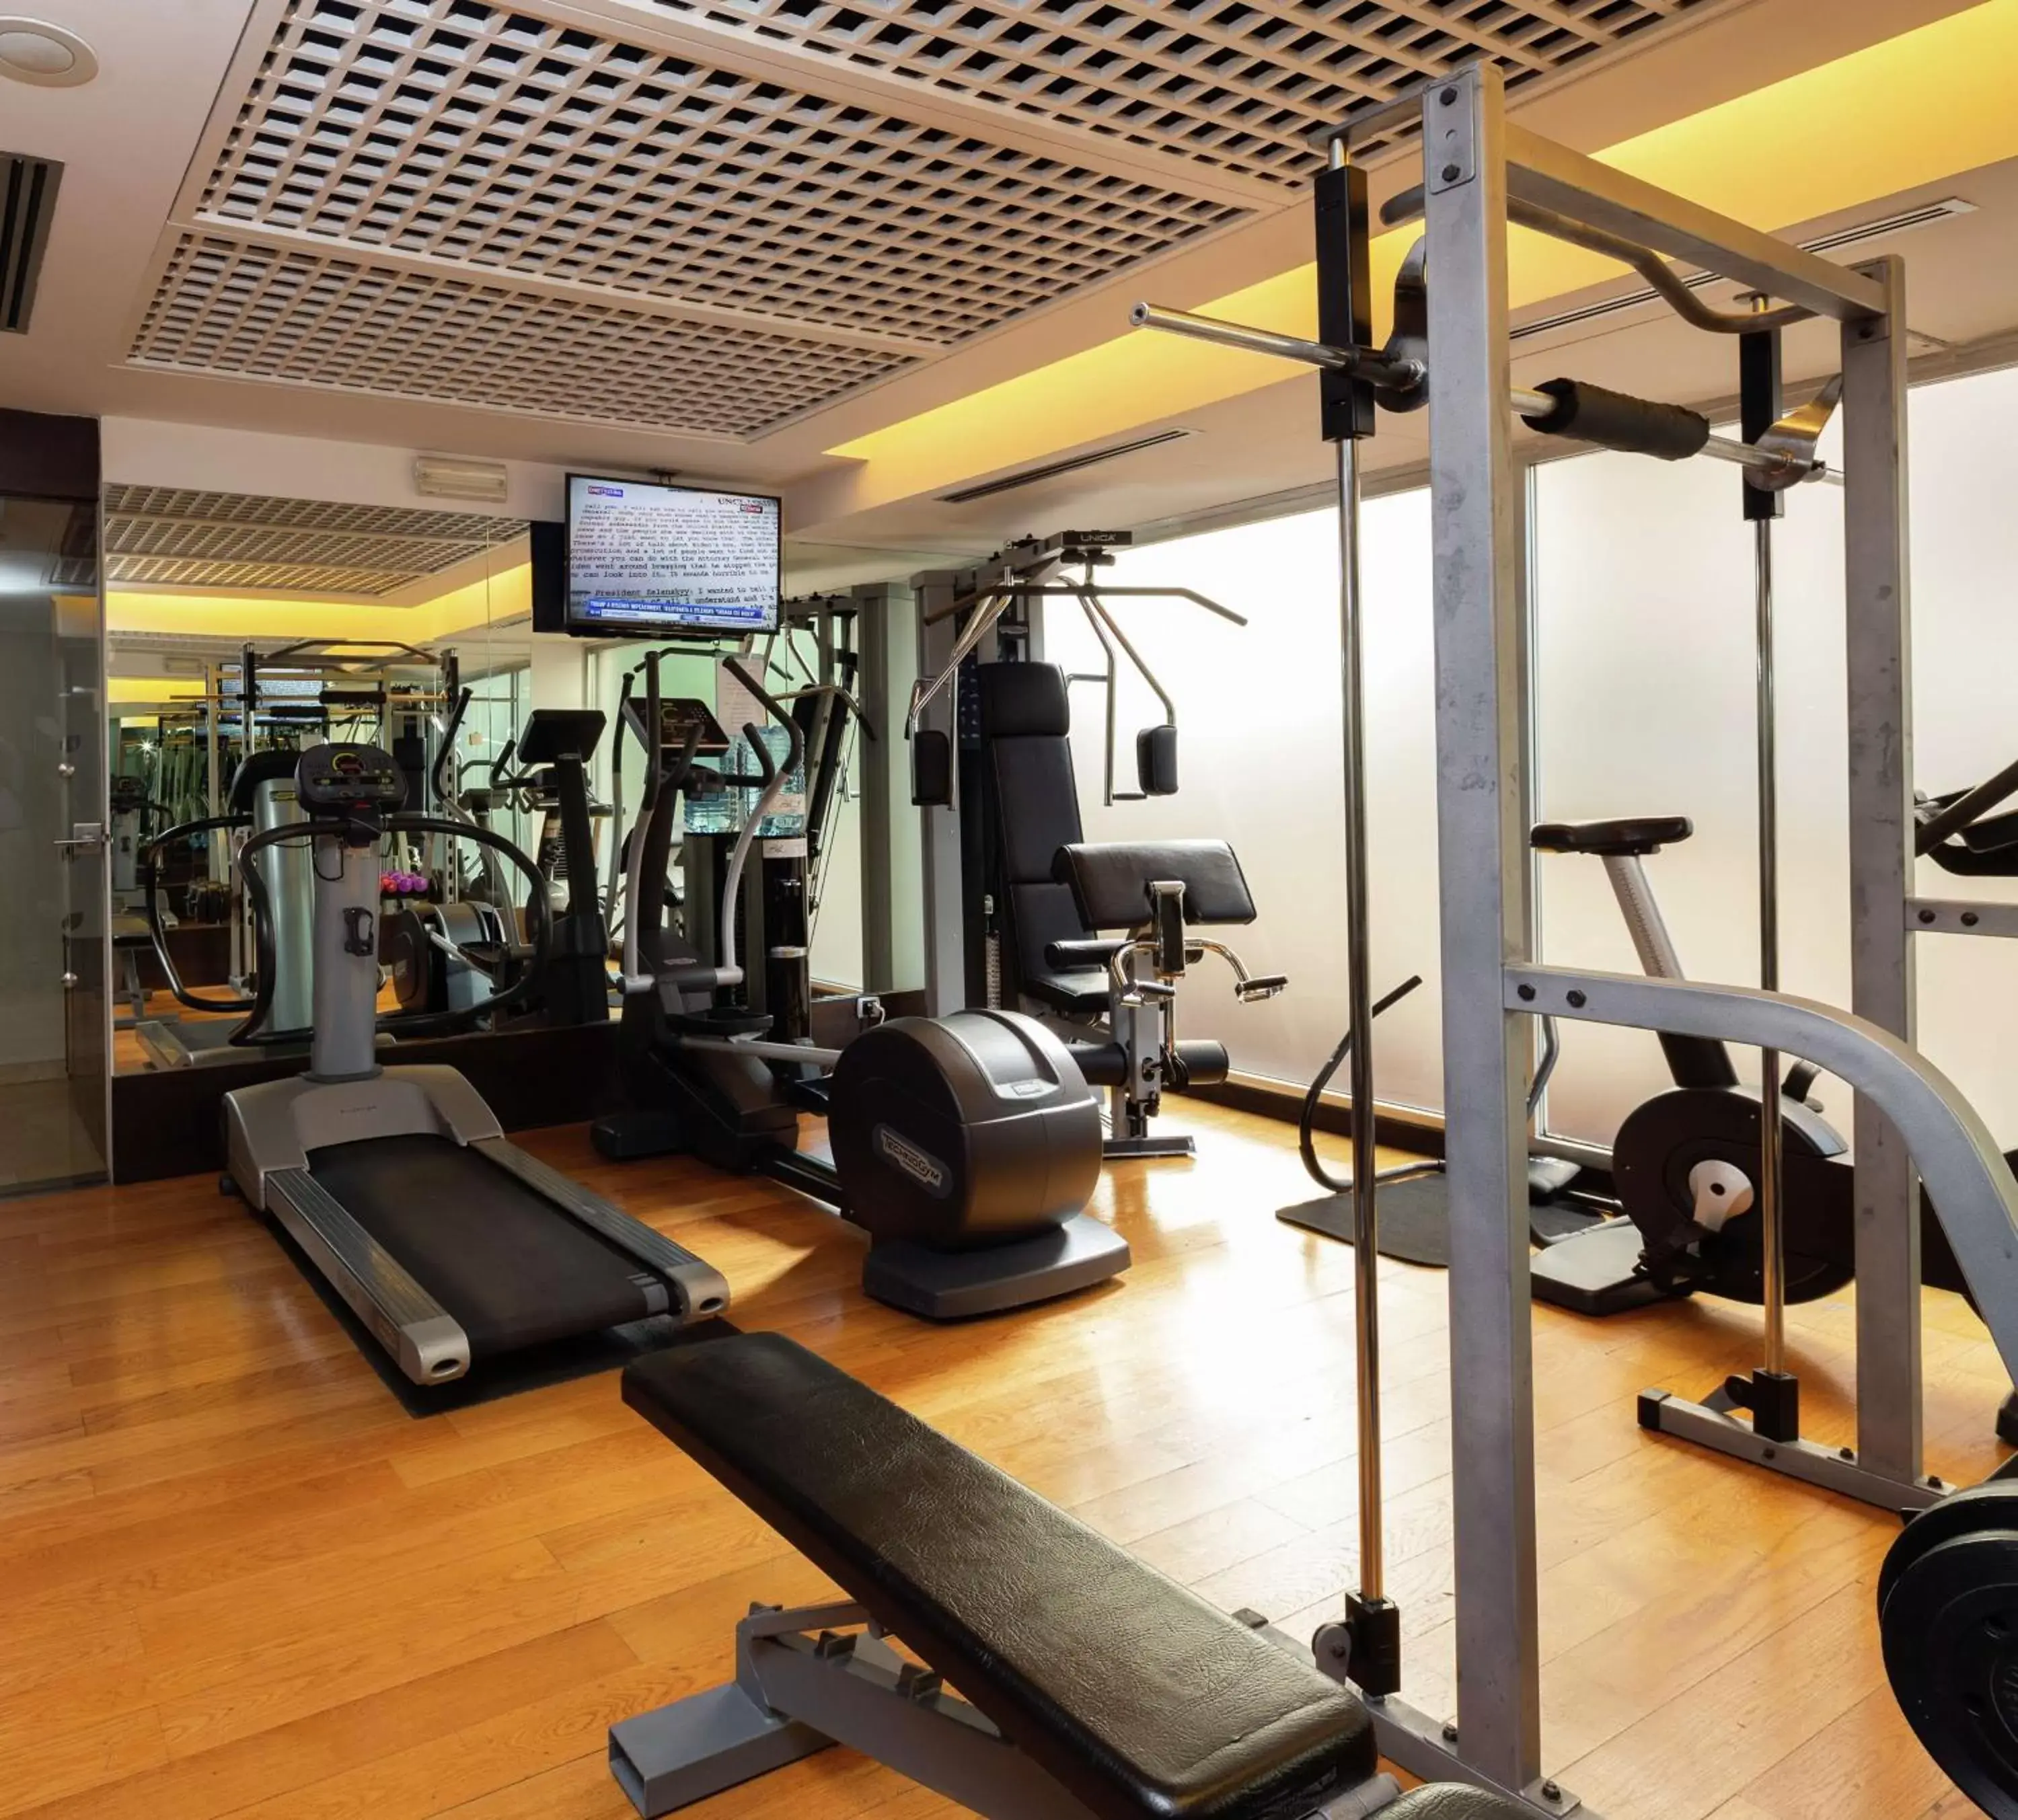 Fitness centre/facilities, Fitness Center/Facilities in Hilton Garden Inn Rome Claridge